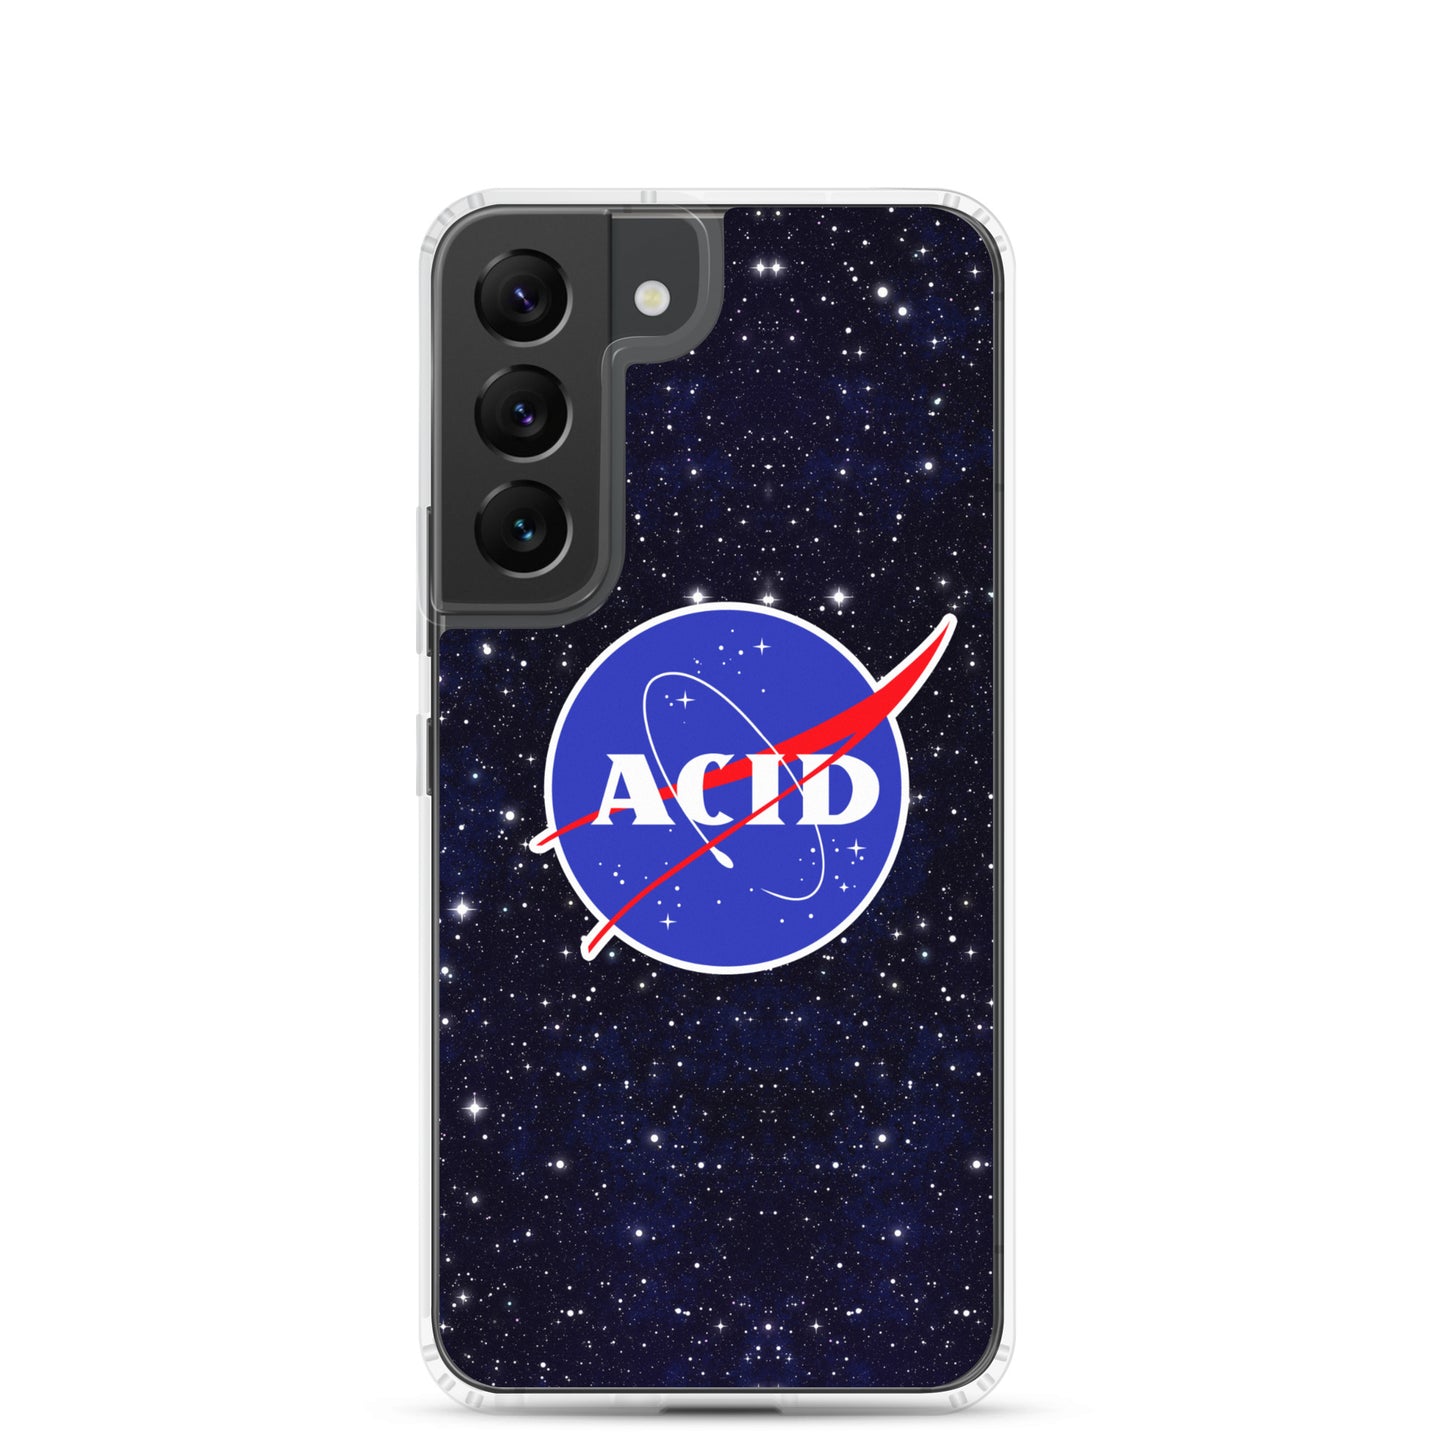 Acid Samsung Case